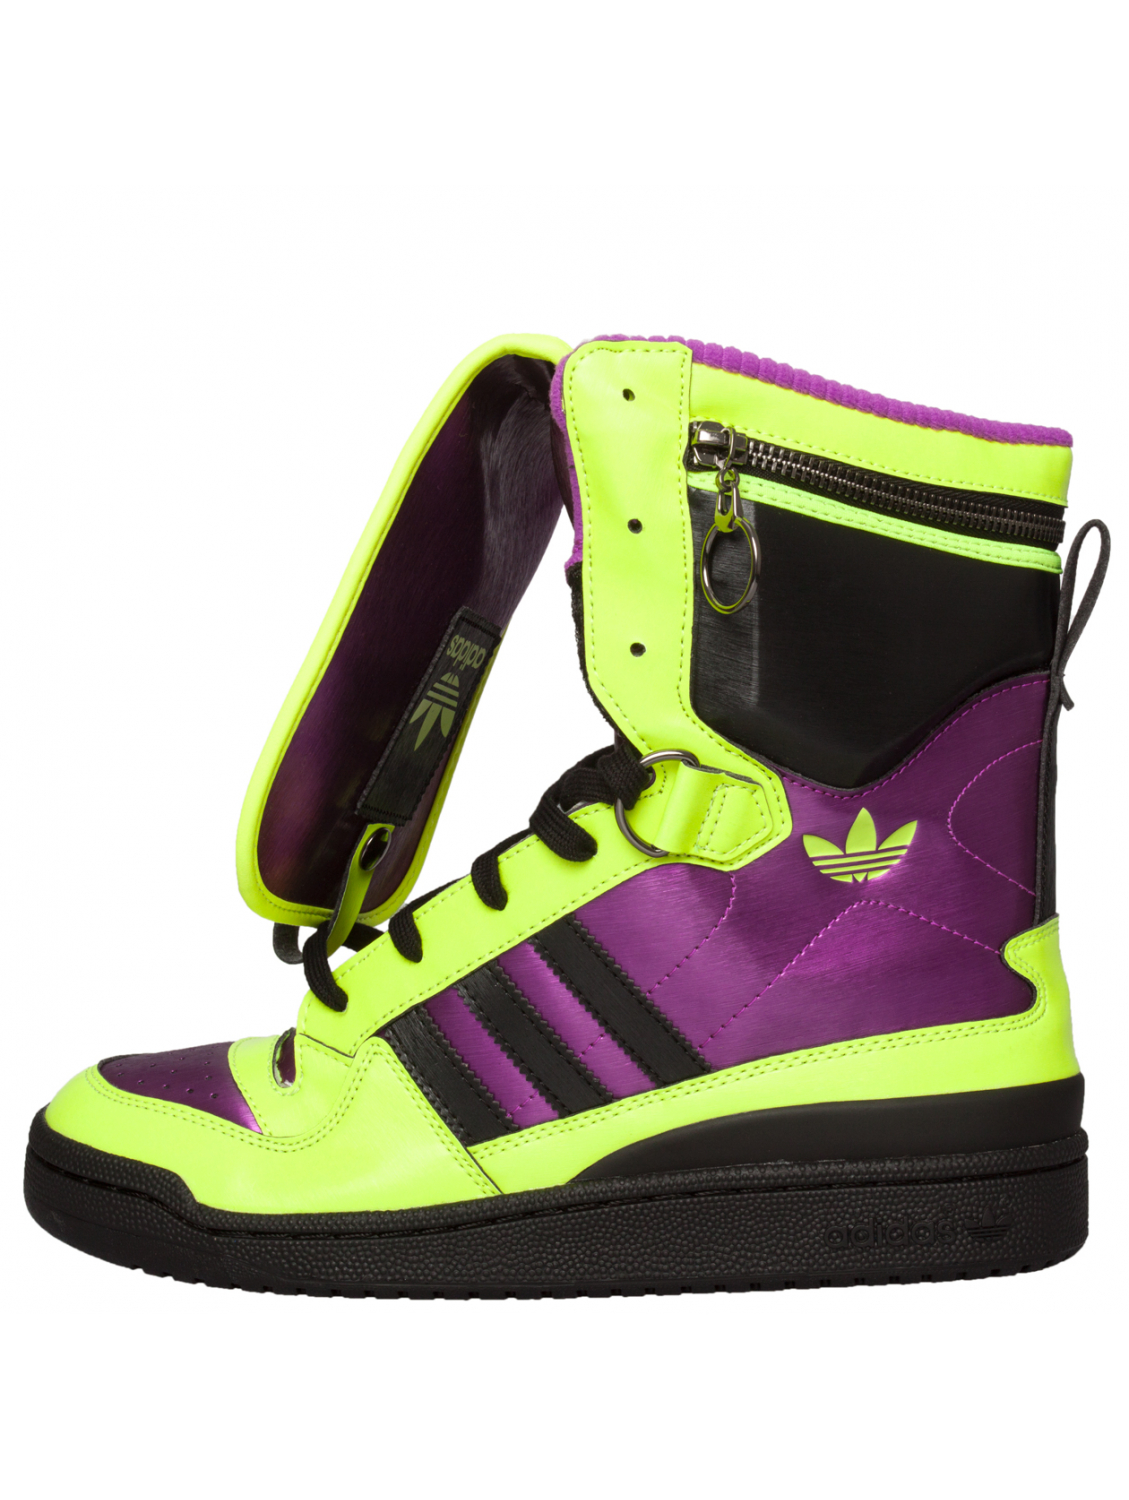 Jeremy scott for adidas Tall Boy Summer Sneaker Multi in Multicolor for ...